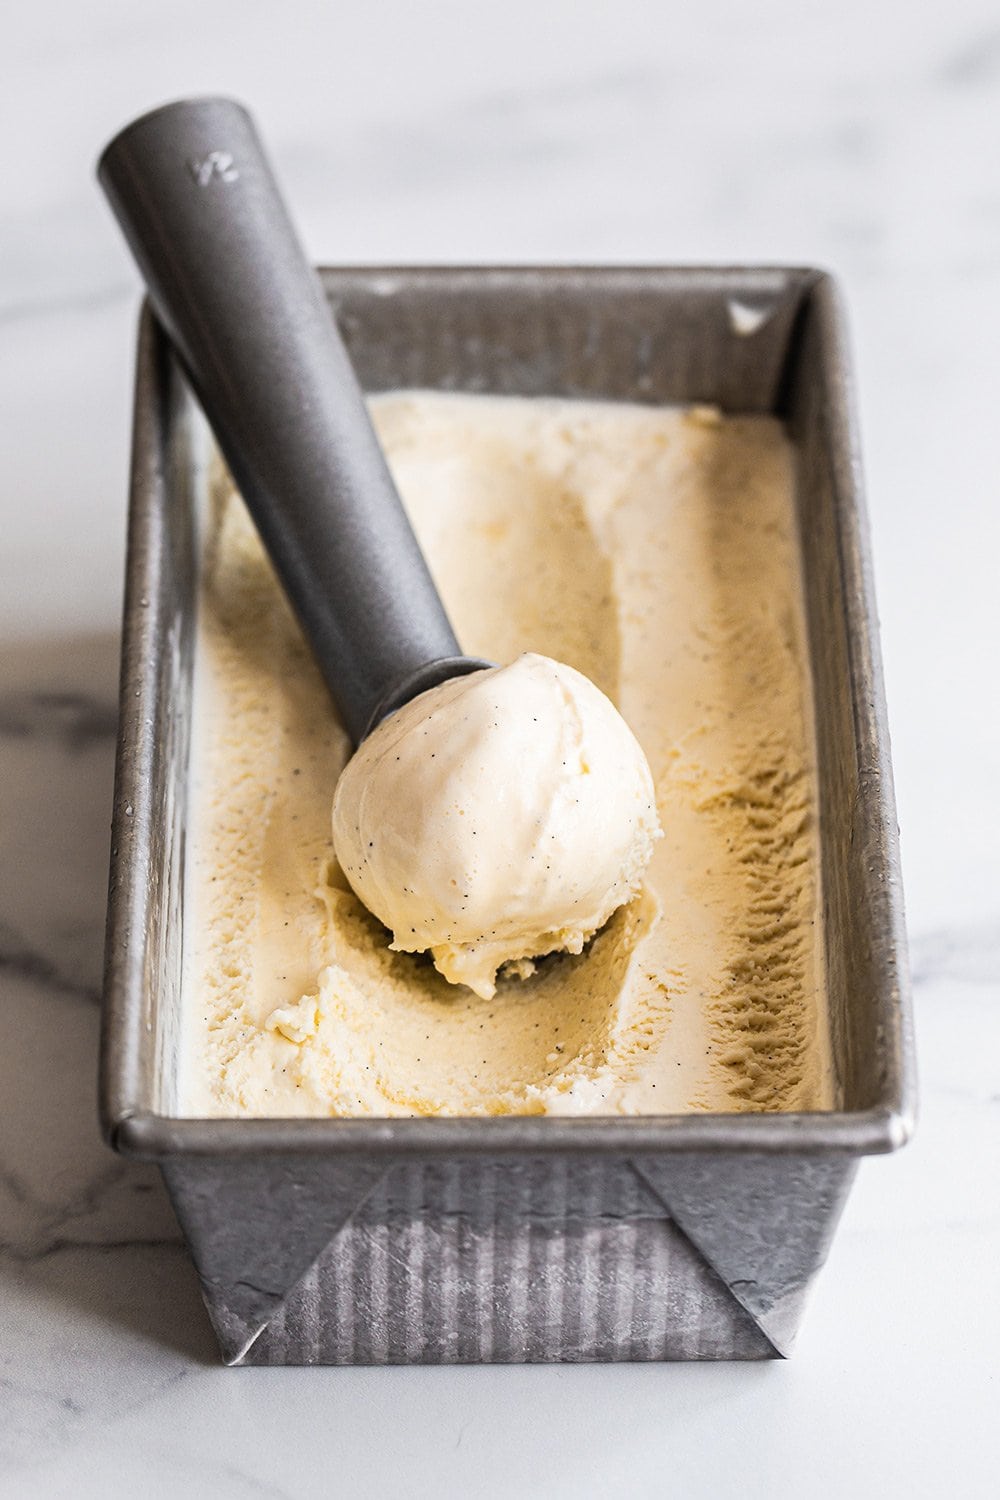 https://handletheheat.com/wp-content/uploads/2014/05/how-to-make-custard-ice-cream-2.jpg